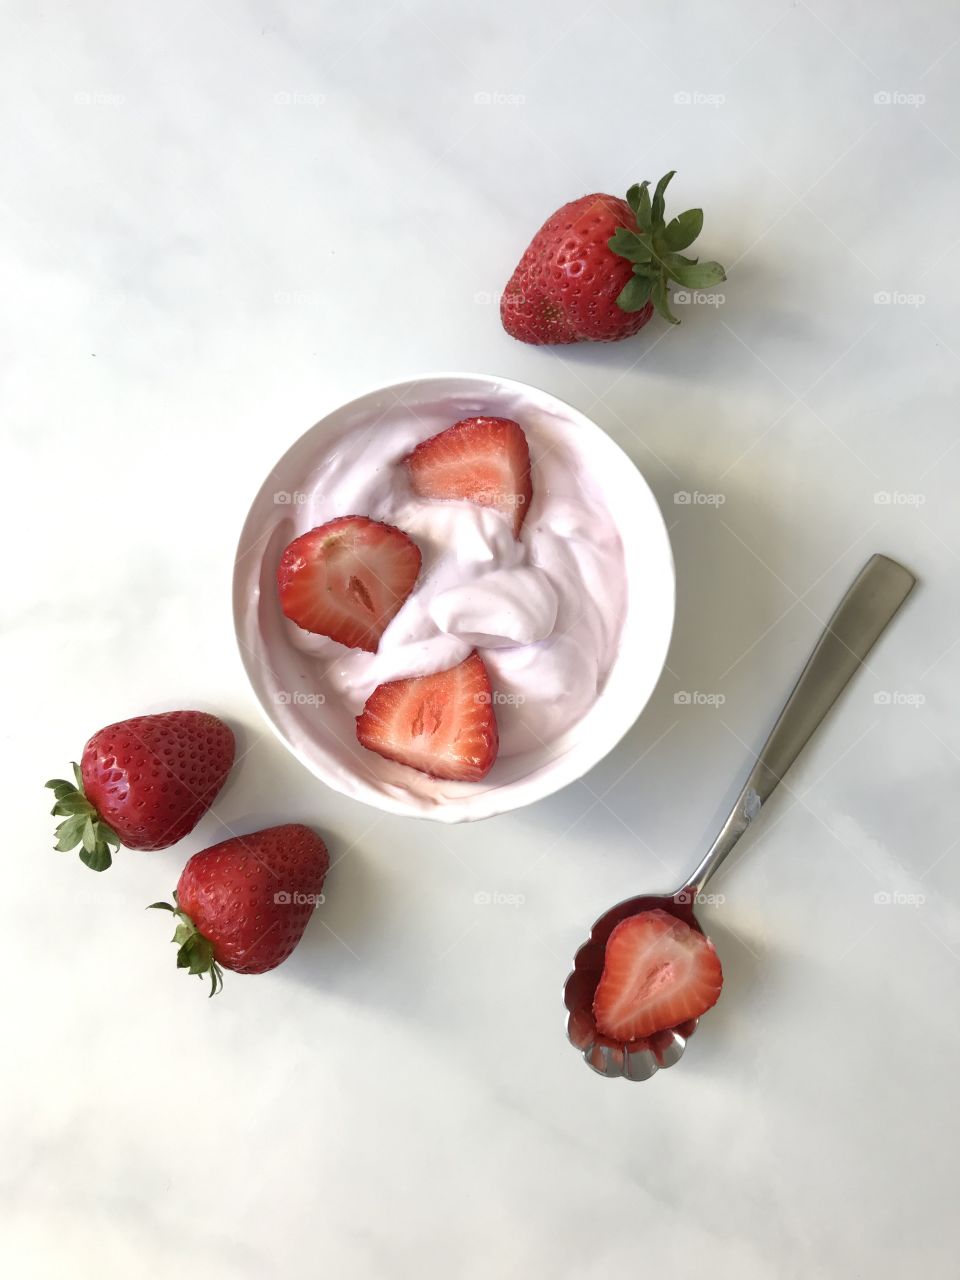 A healthy lunch of yogurt with fresh strawberries!